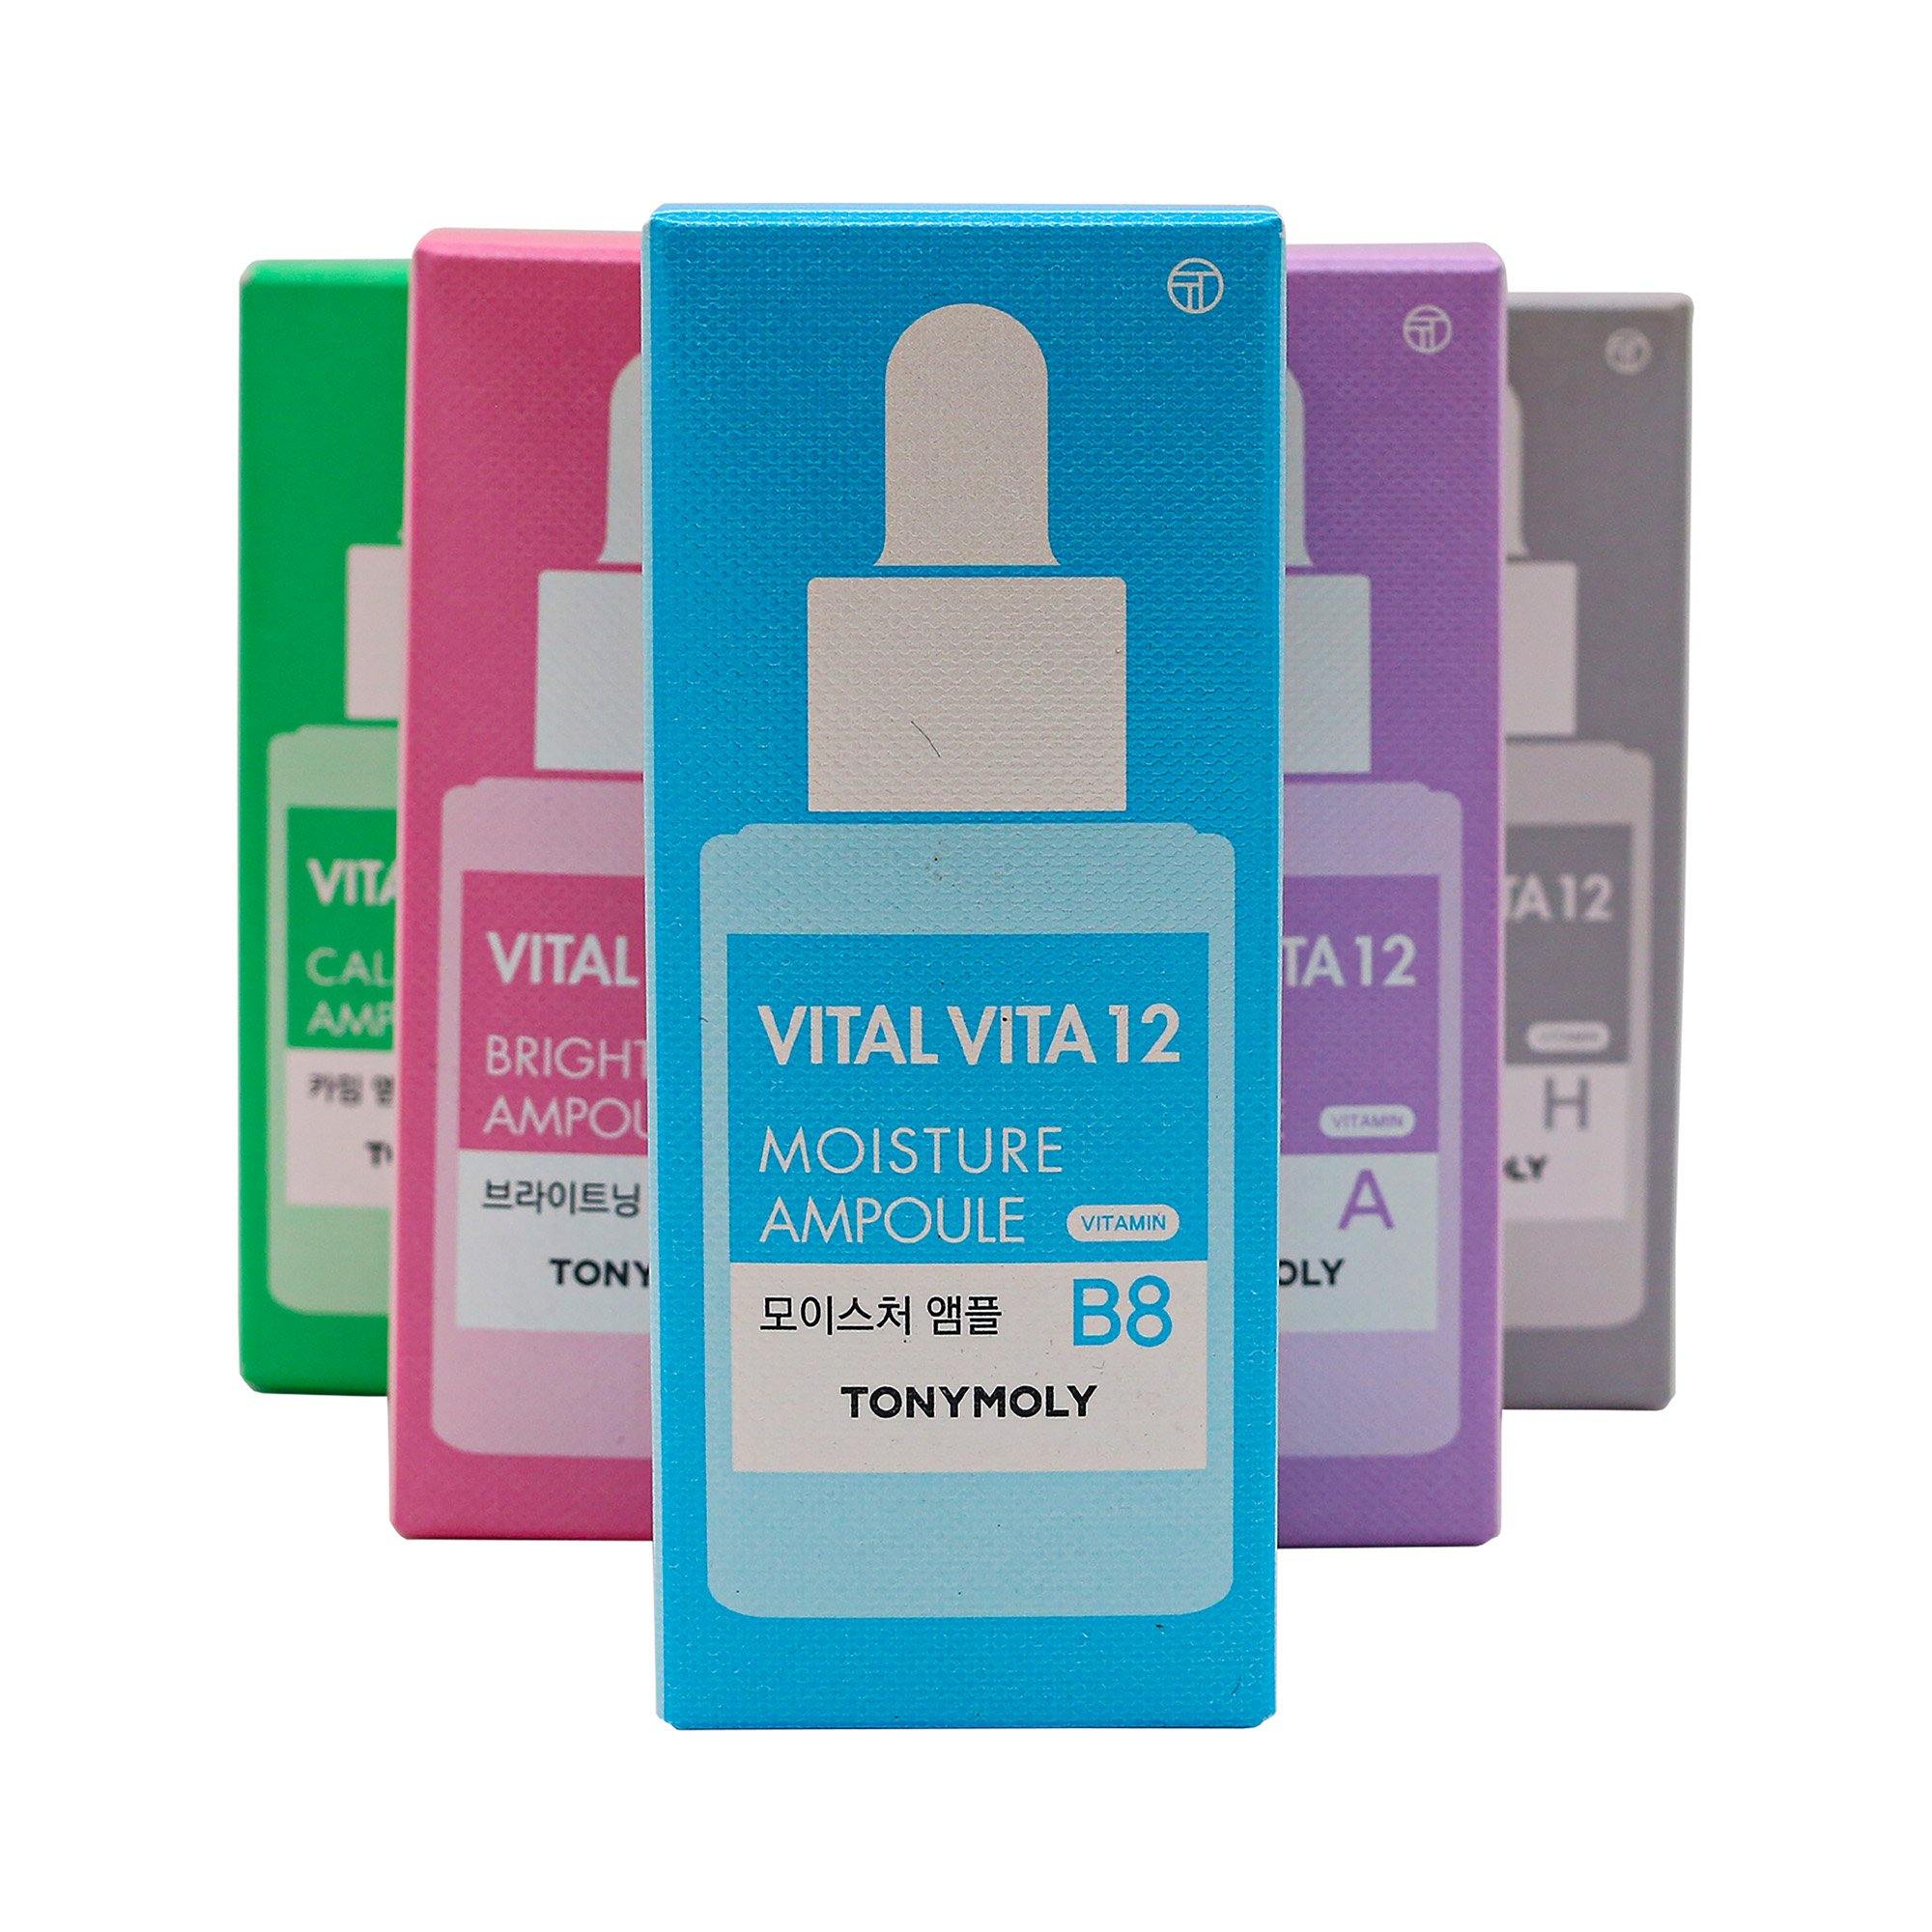 TONYMOLY Vital Vita 12 - Moisture Ampoule 30ml - TONYMOLY OFFICIAL